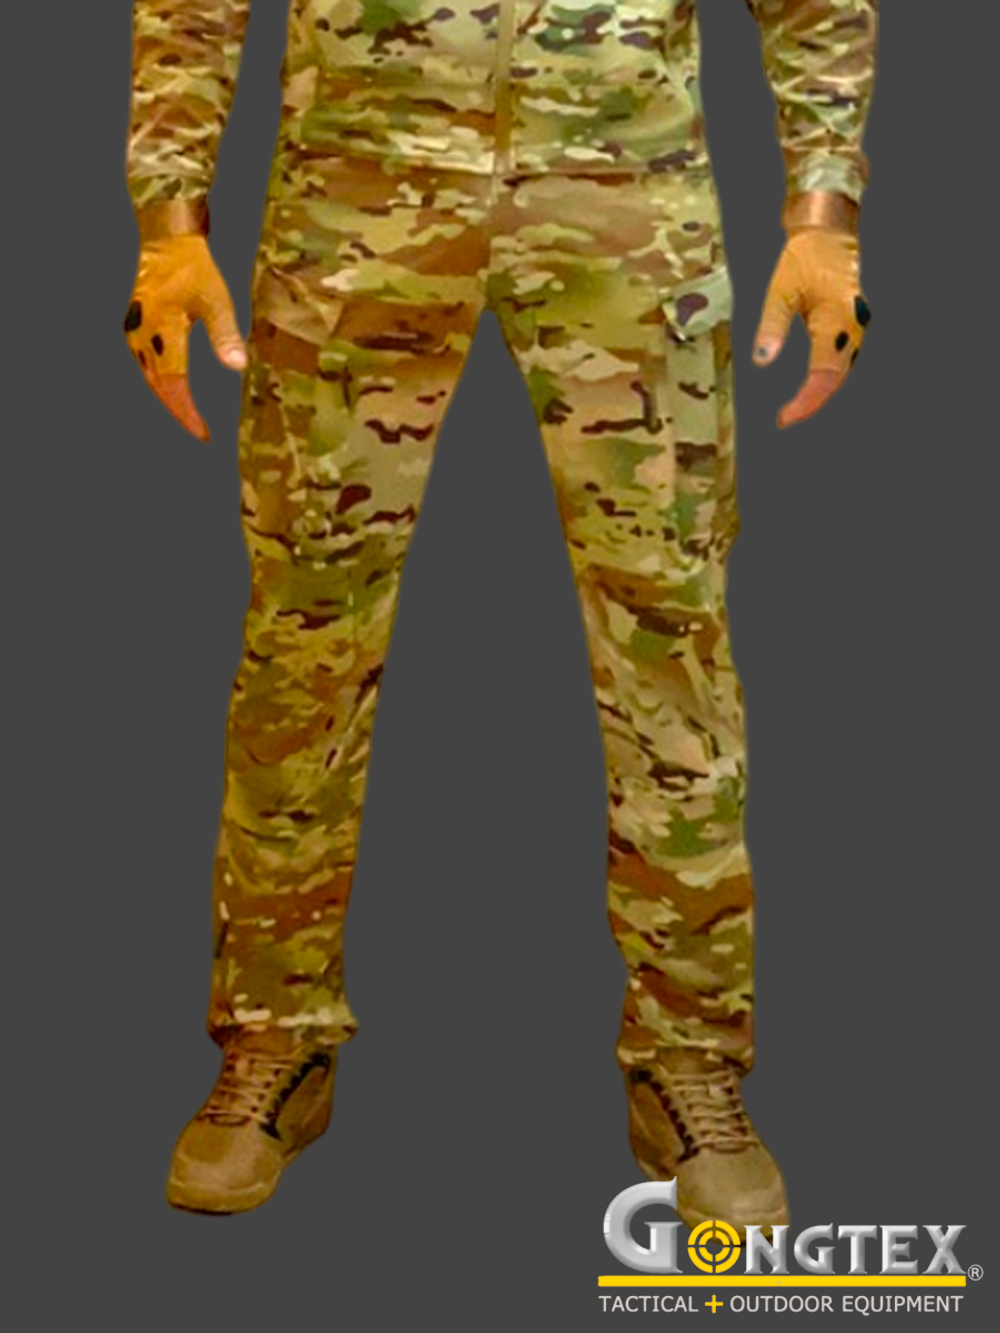 Брюки SoftShell Gongtex Outdoor Tactical Suit (без флиса). Мультикам